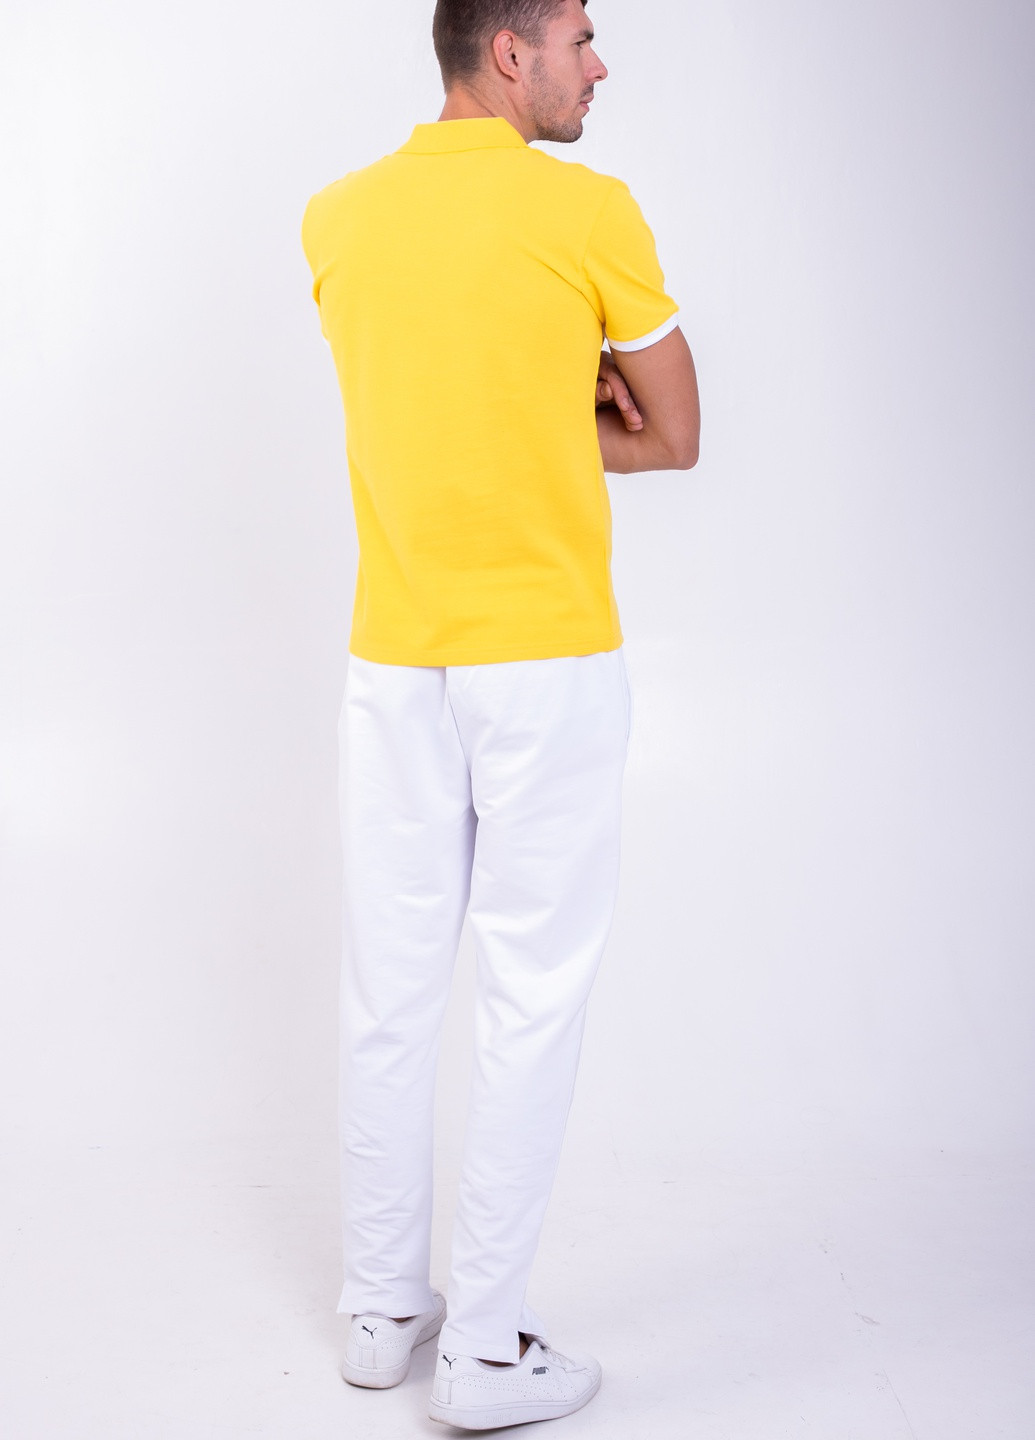 Желтая футболка-футболка поло мужская для мужчин TvoePolo